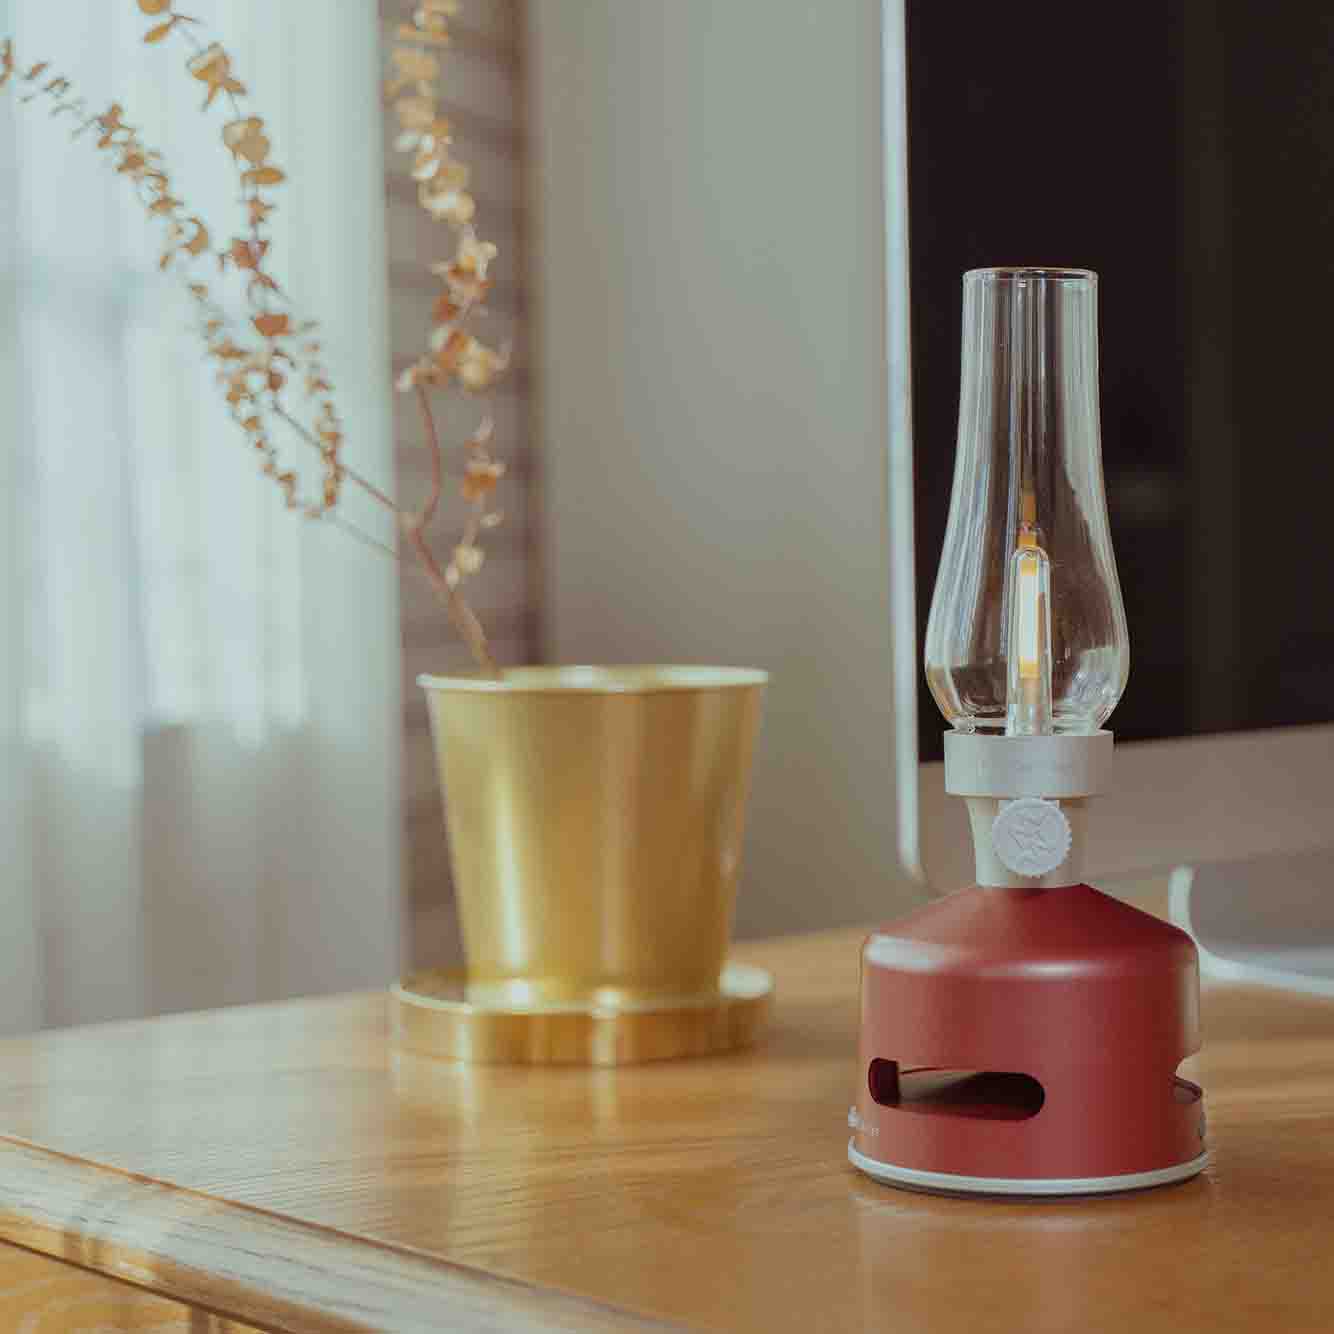 MoriMori LED-Lantern & Bluetooth Speaker Lumi Wine Red│Buitenverlichting│art. FLS-2012-SR│Op bureau naast messing vaasje